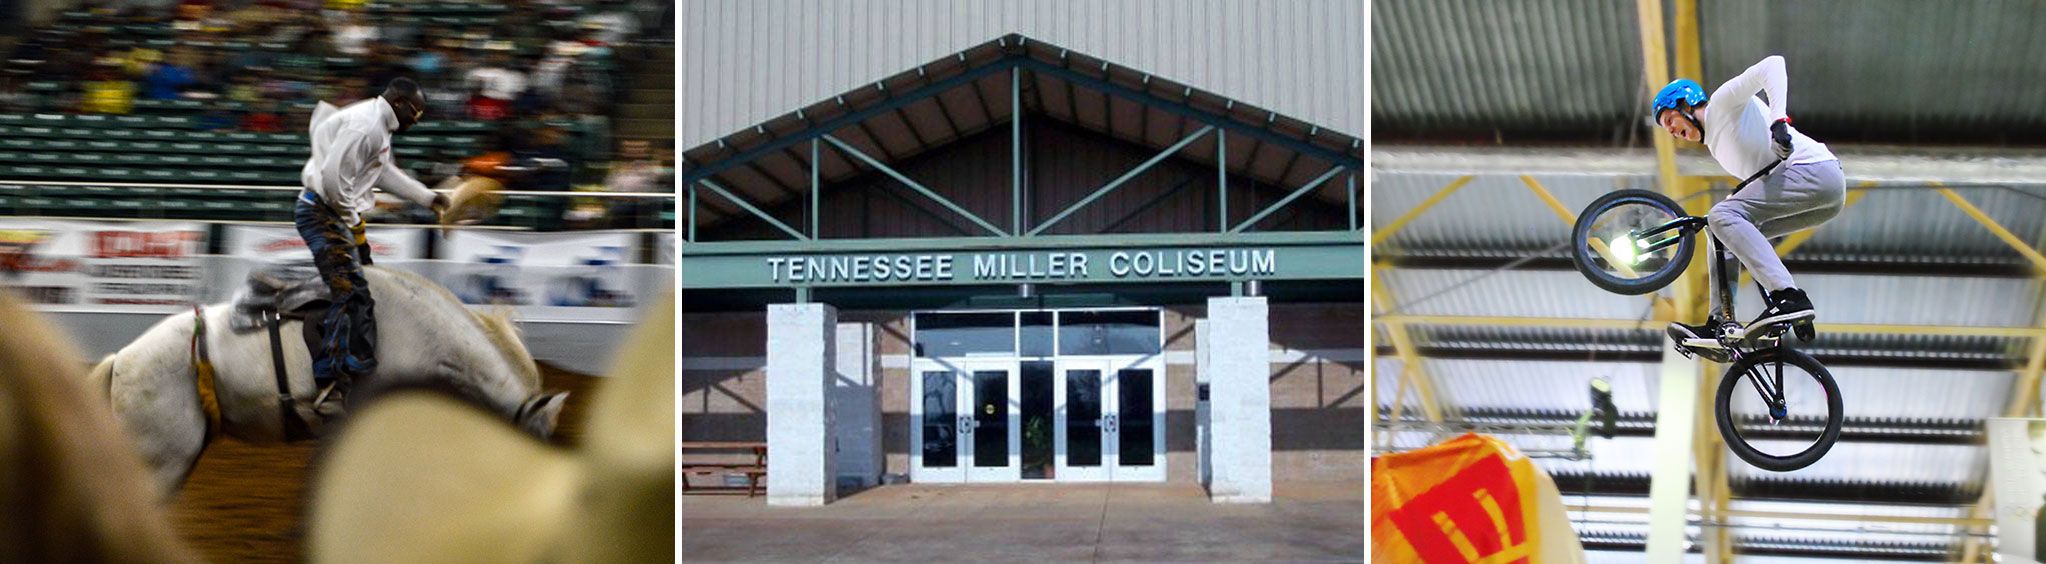 Tennessee Miller Coliseum